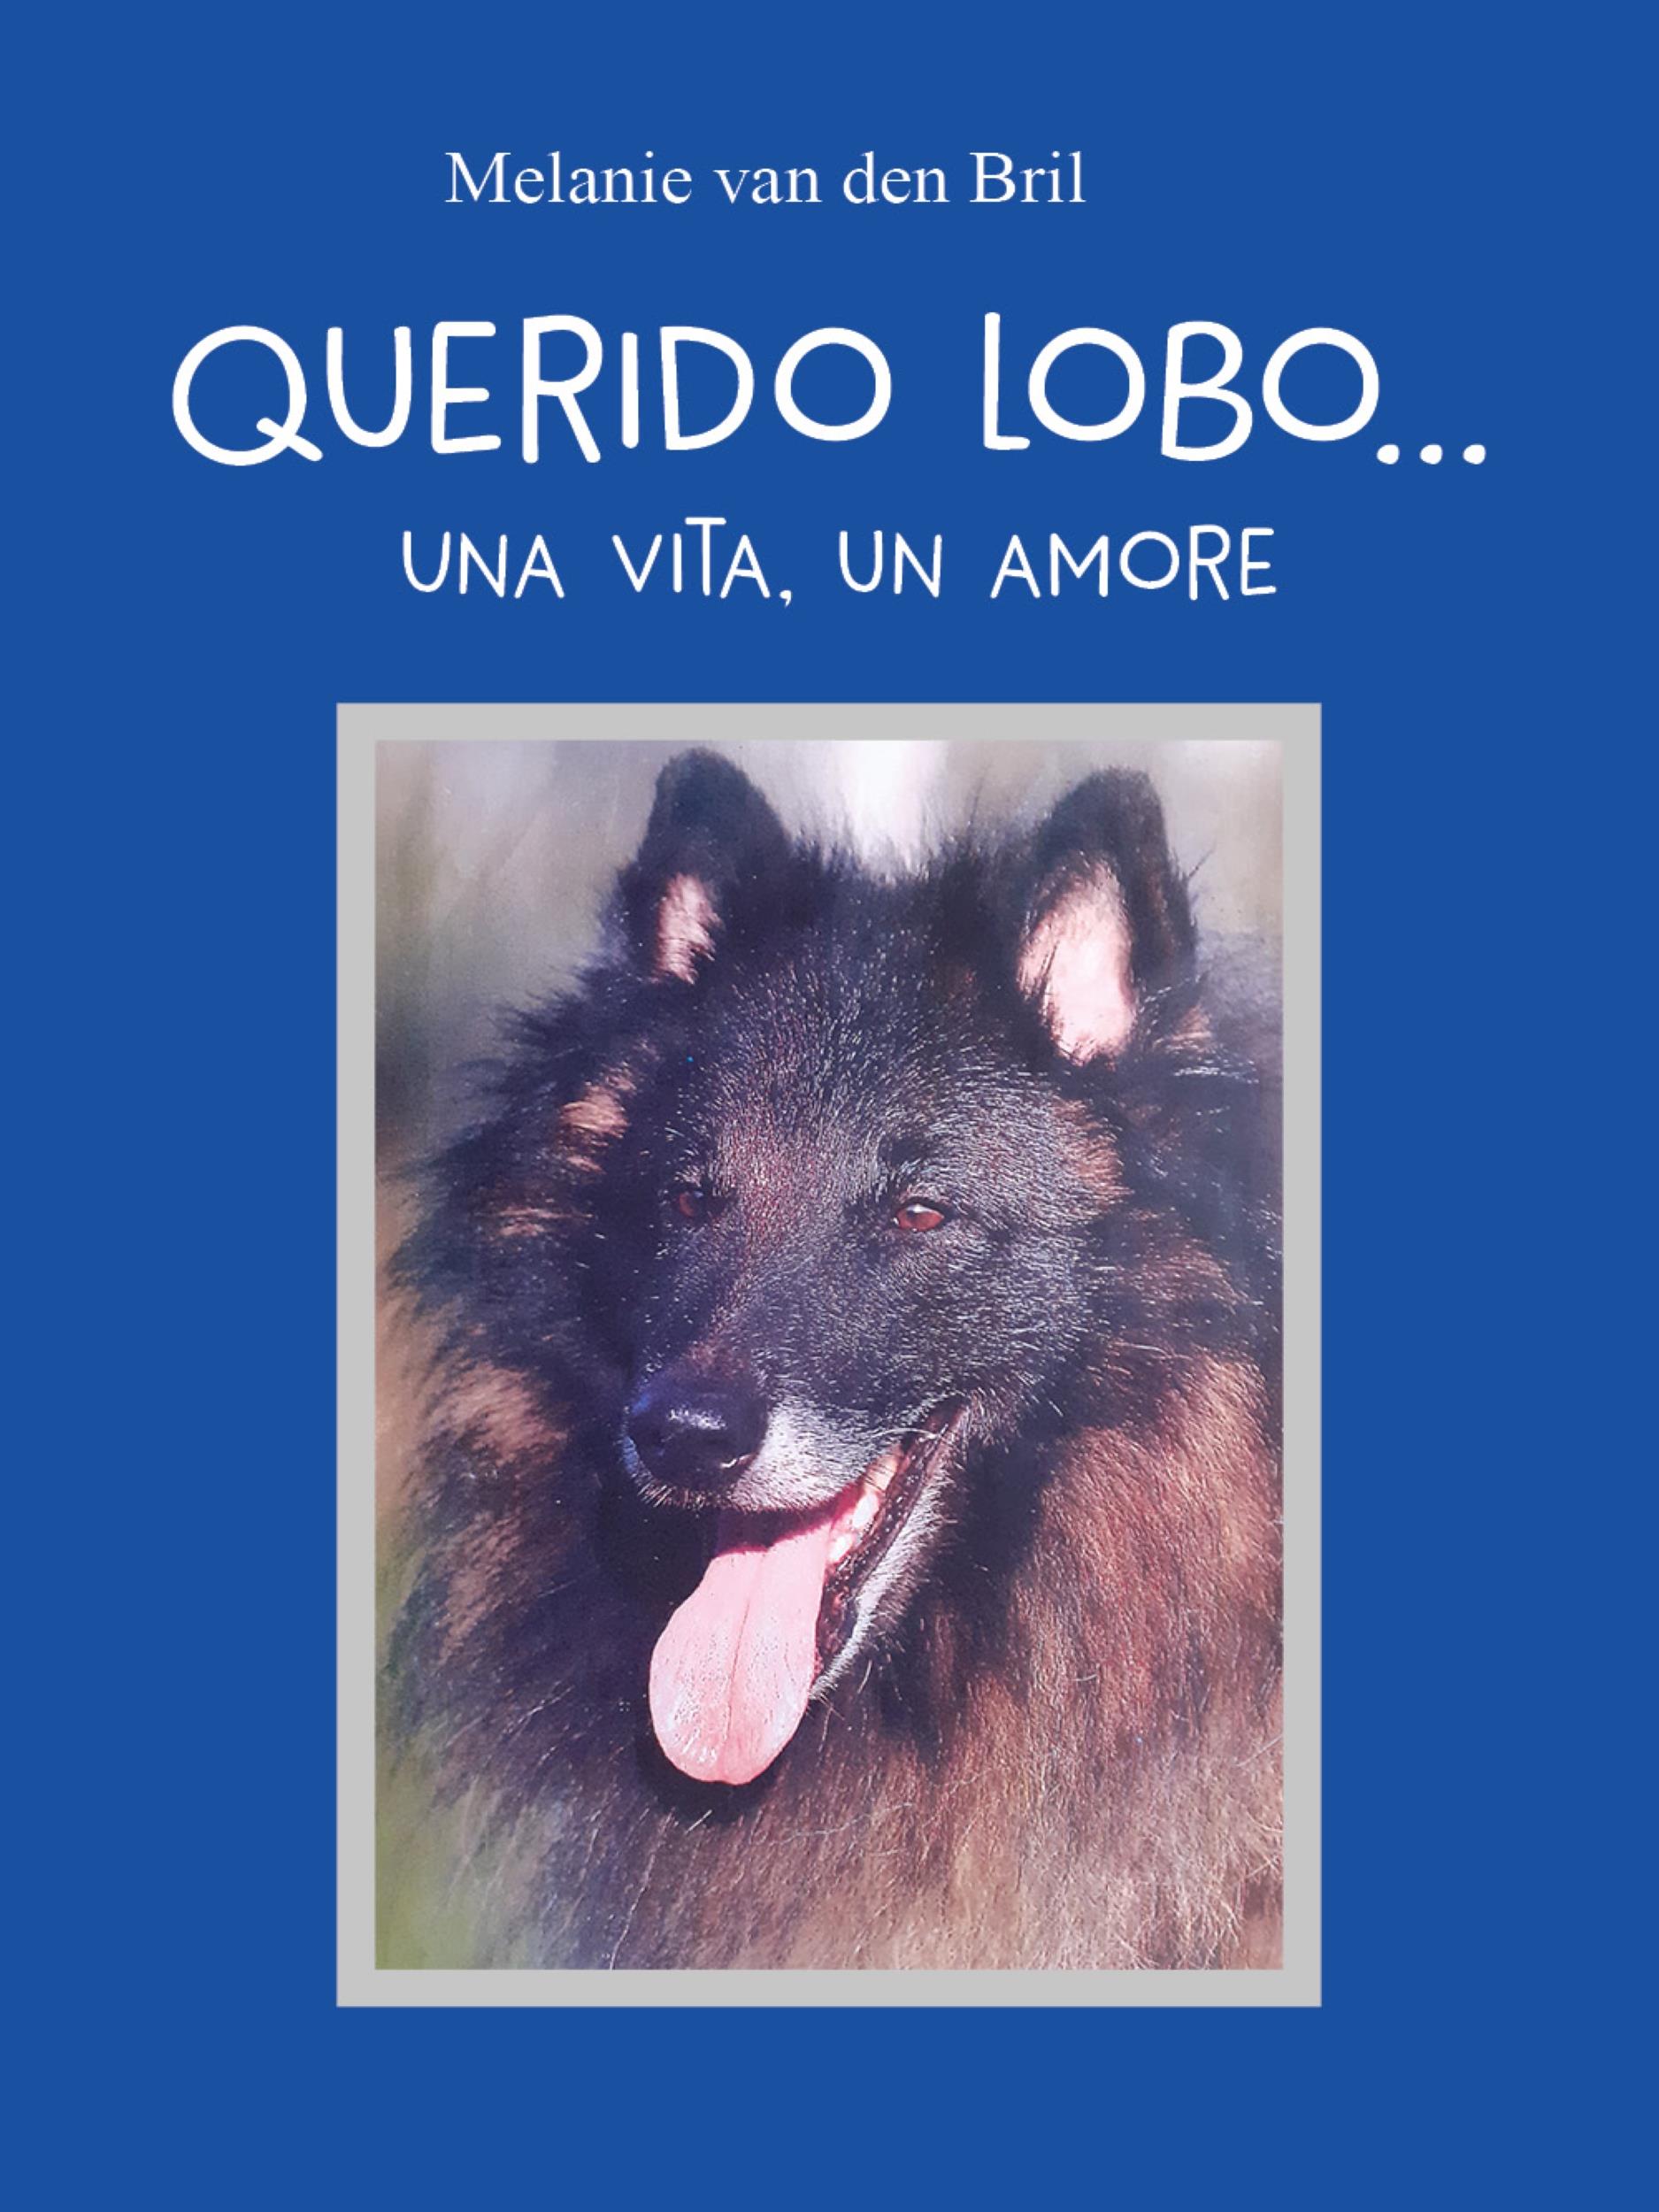 Querido Lobo, una vita un amore...